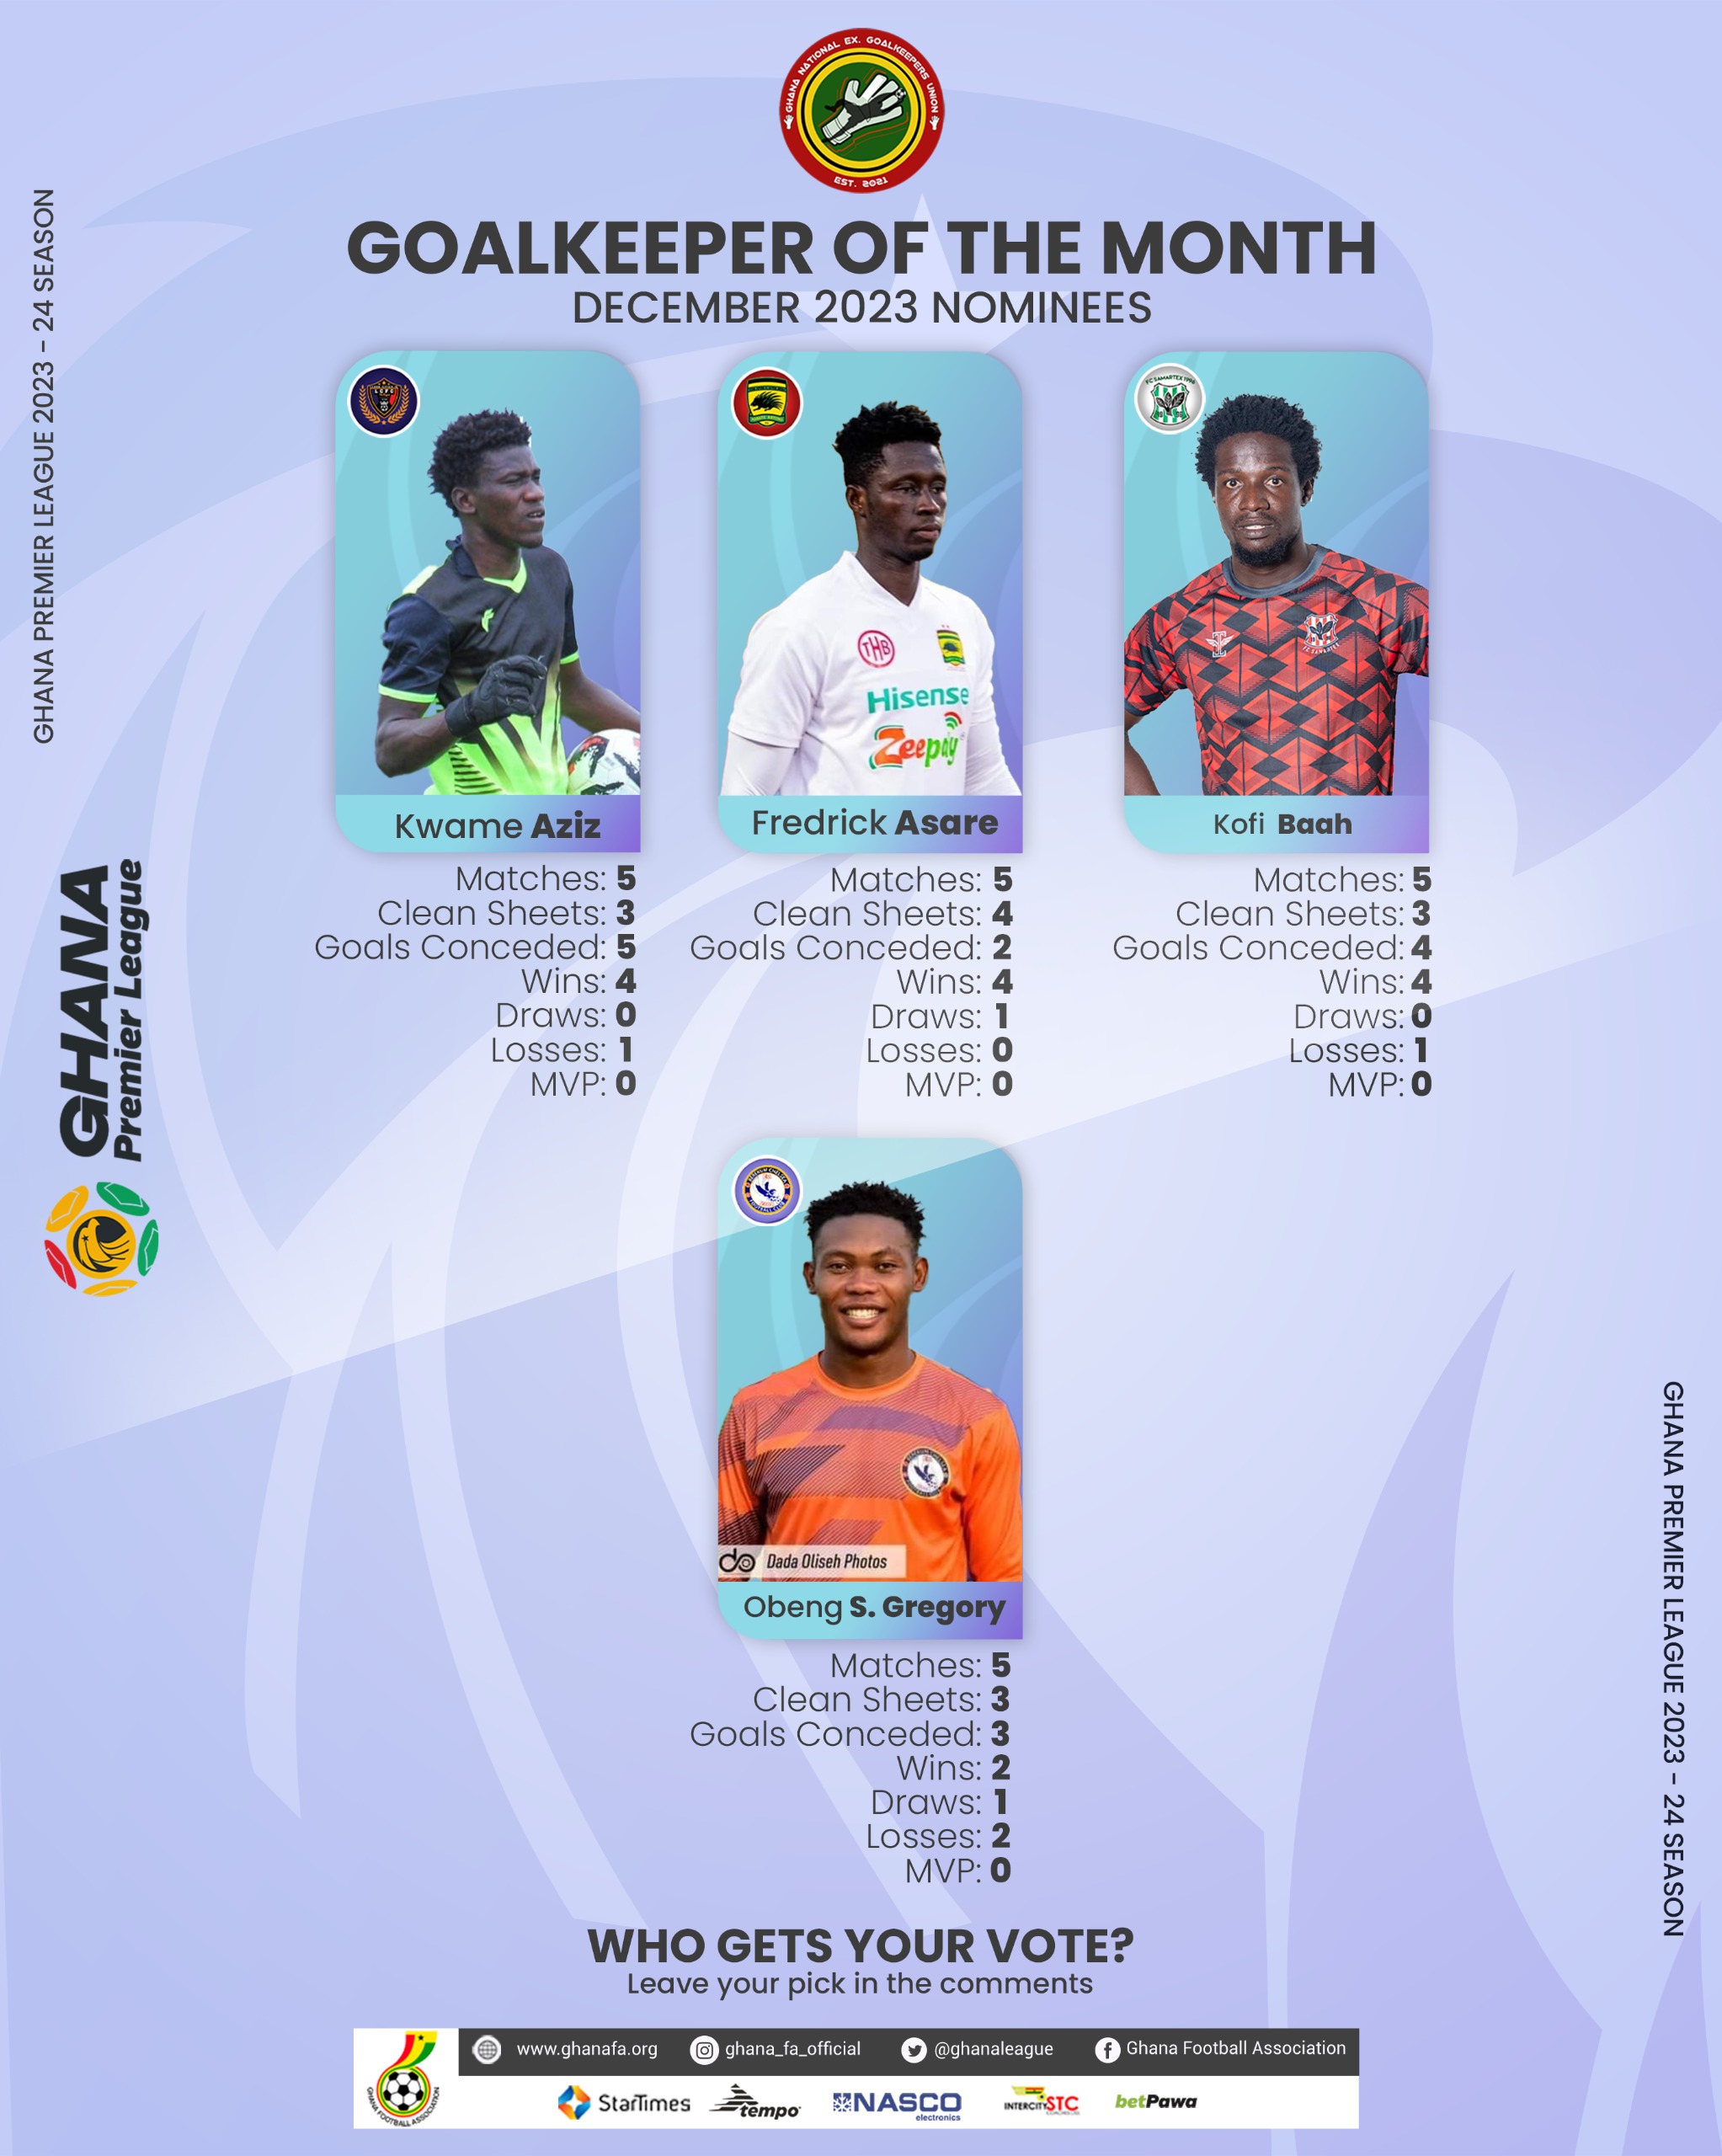 Asare, Baah & Obeng gunning for Goalkeeper of the month award